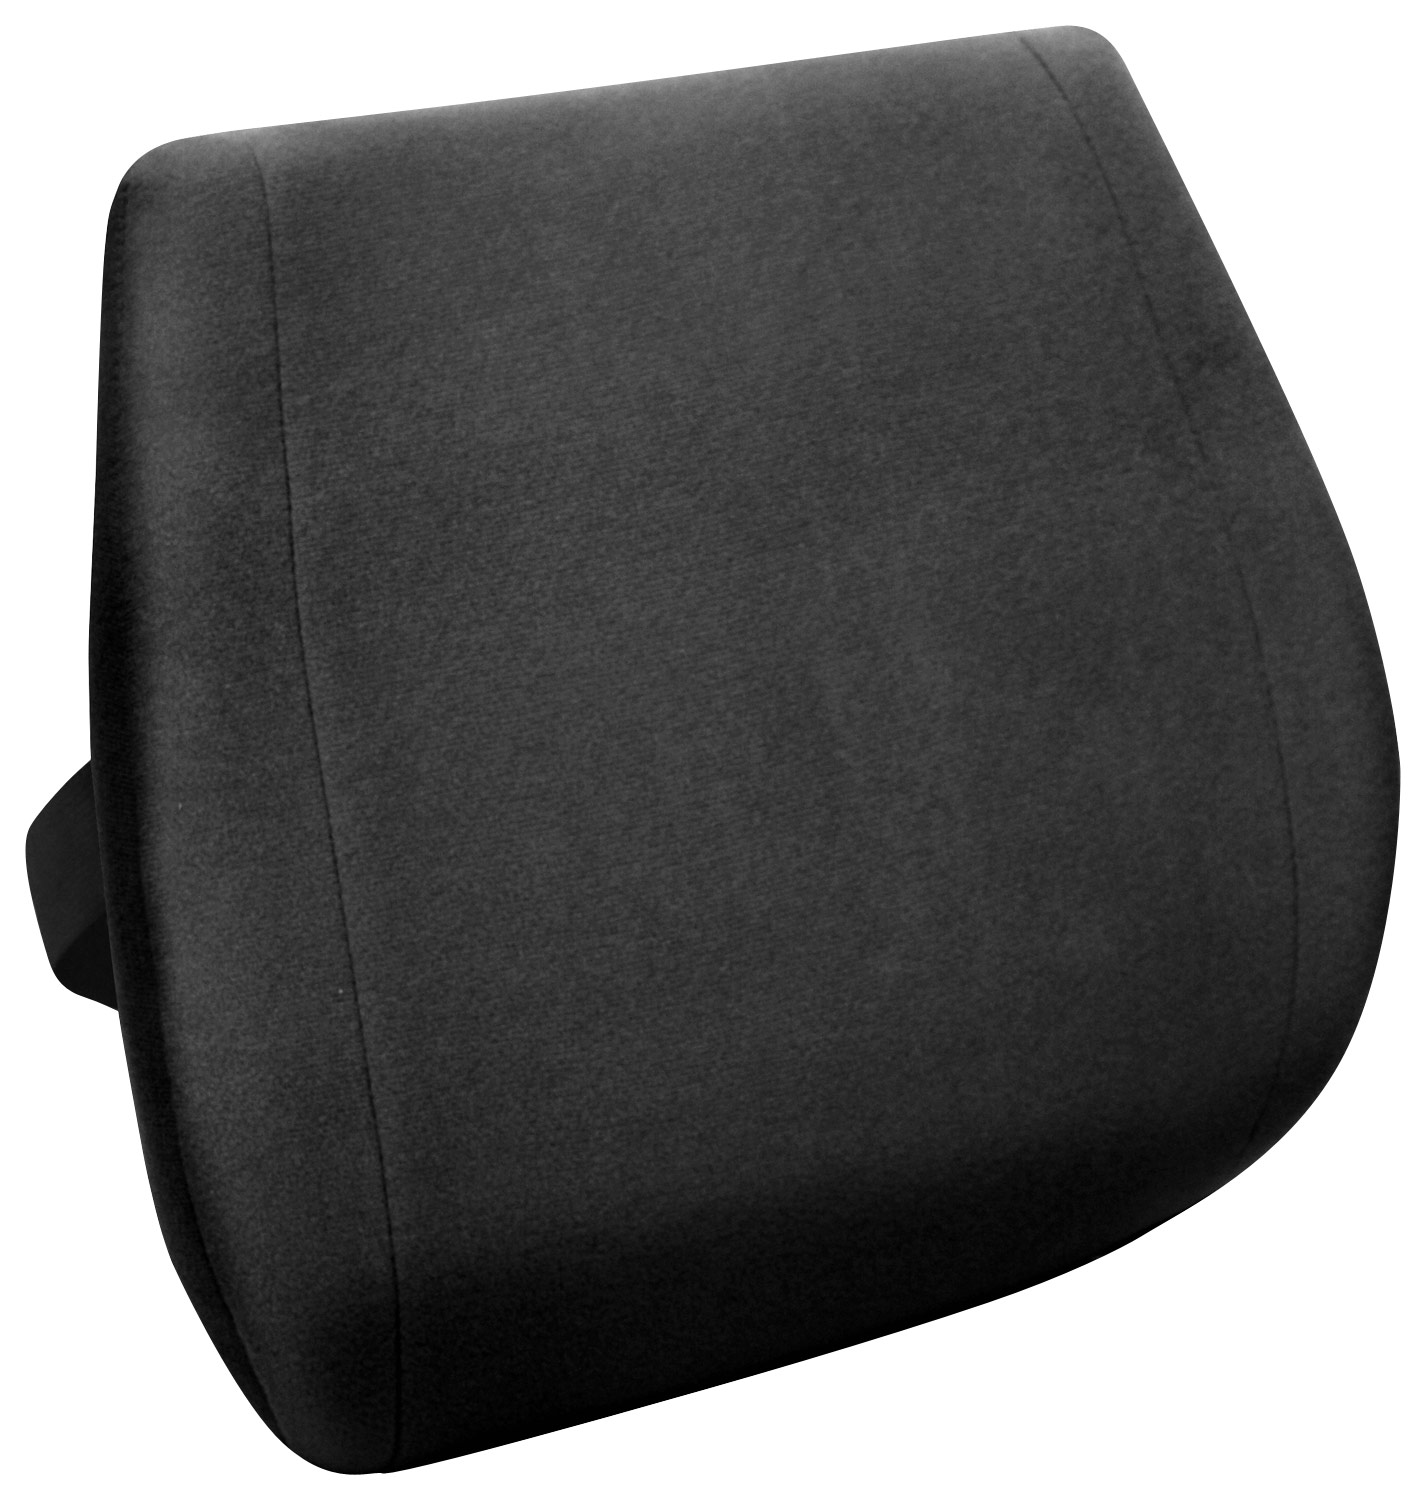 Comfort Products Inc. Heated Lumbar Massage Cushion Black 60-2802MR05 -  Best Buy